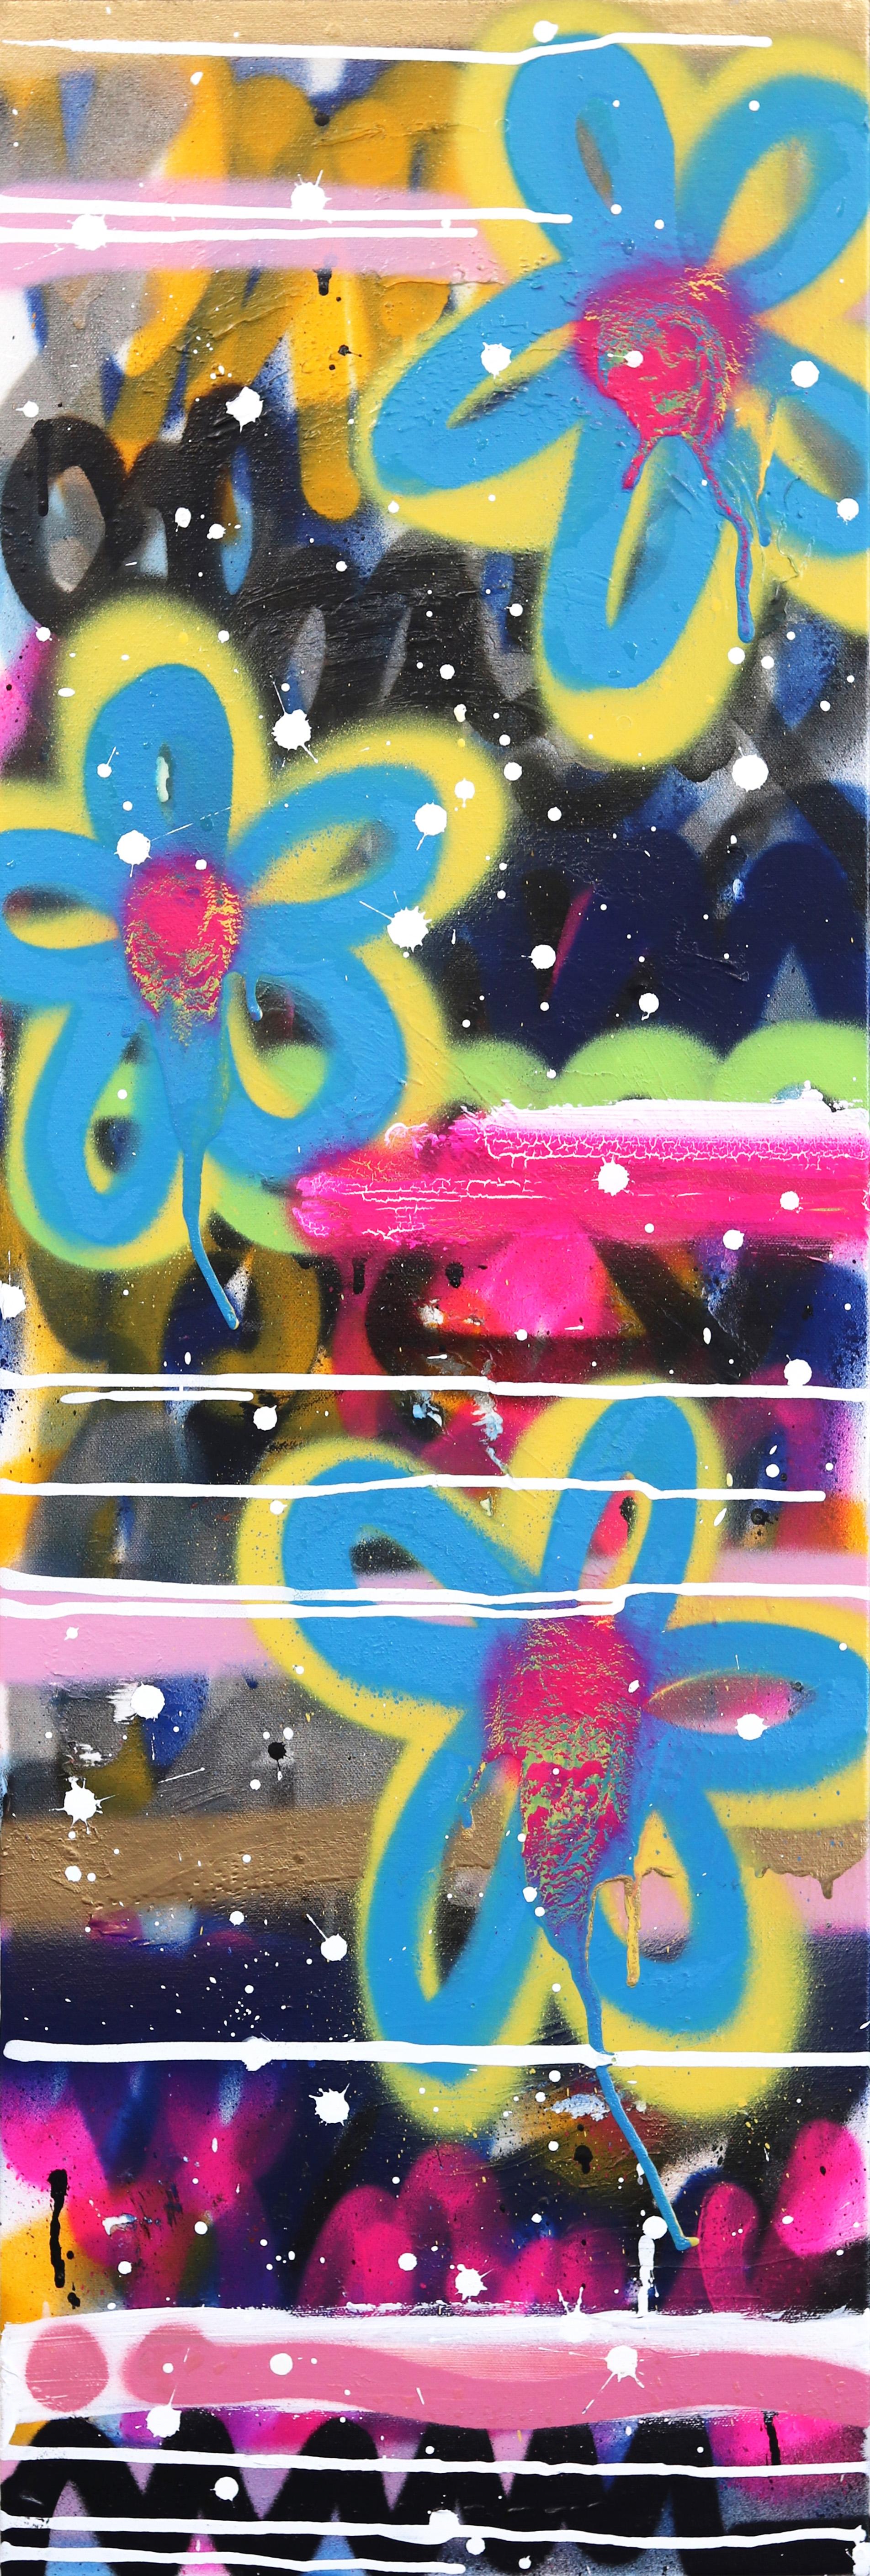 Abendblumen – Originales farbenfrohes Urban Love Pop Street Art Graffiti-Gemälde